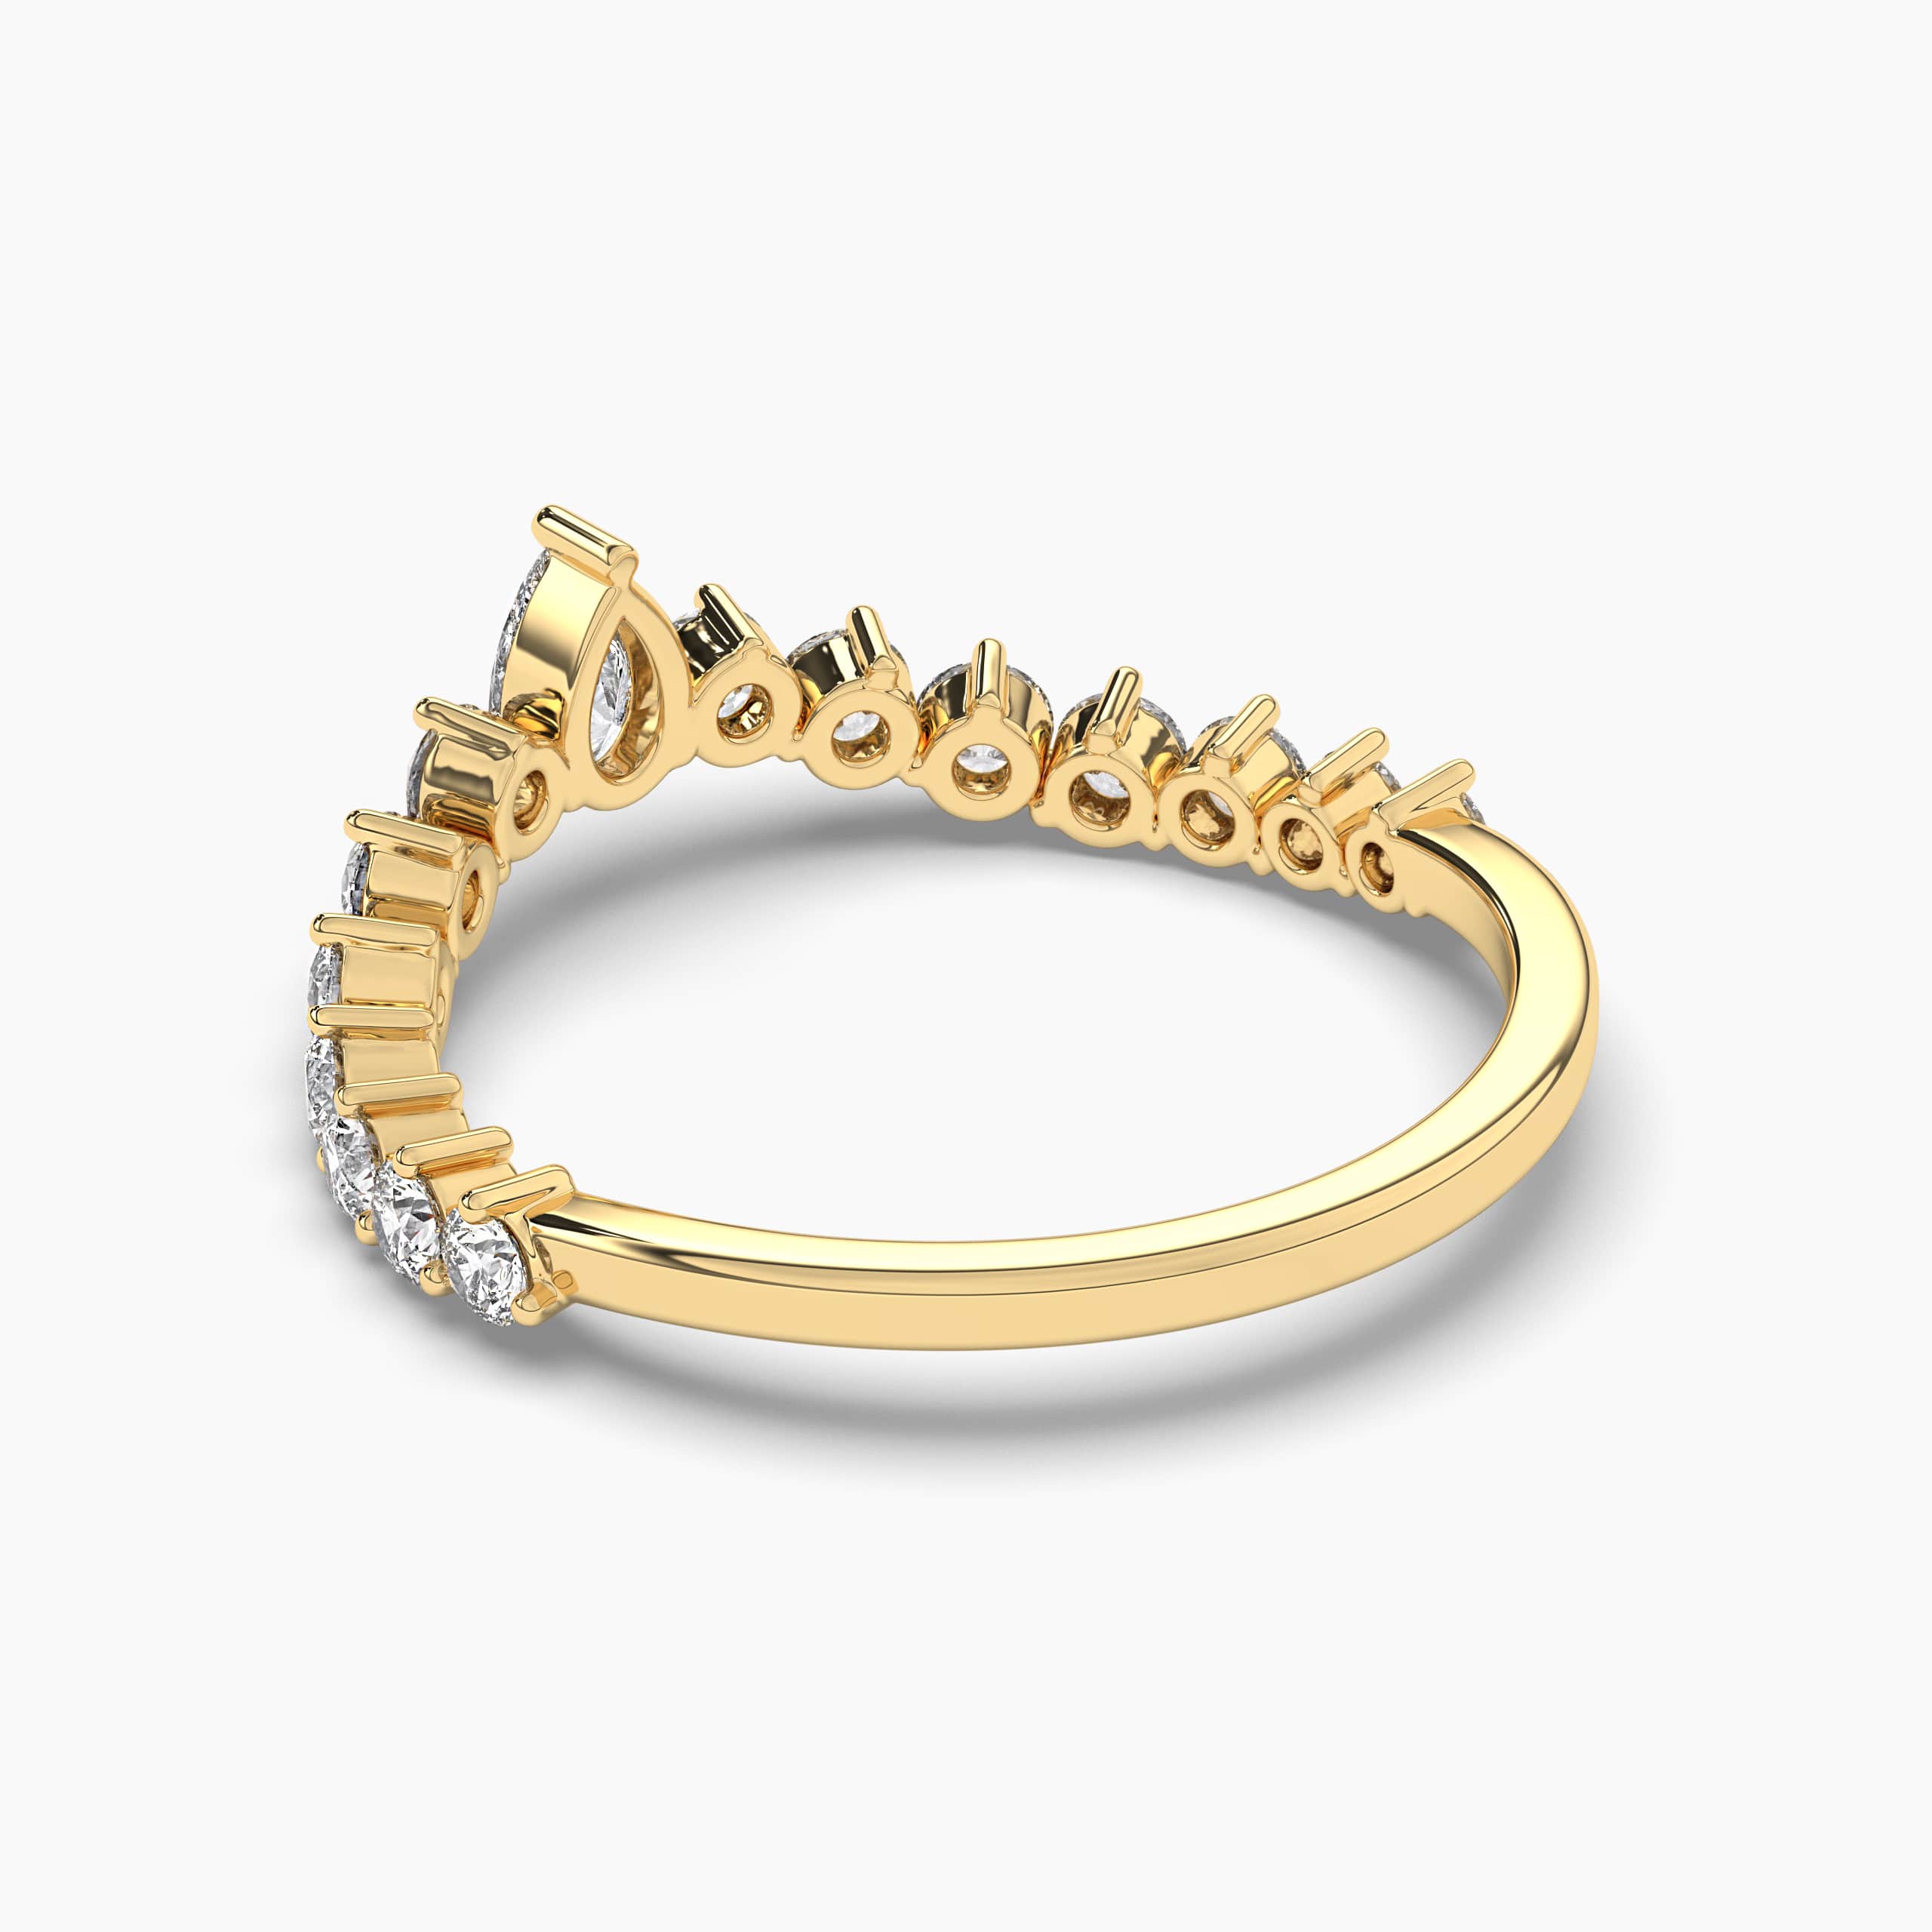 Pear shaped aquamarine engagement ring set yellow gold